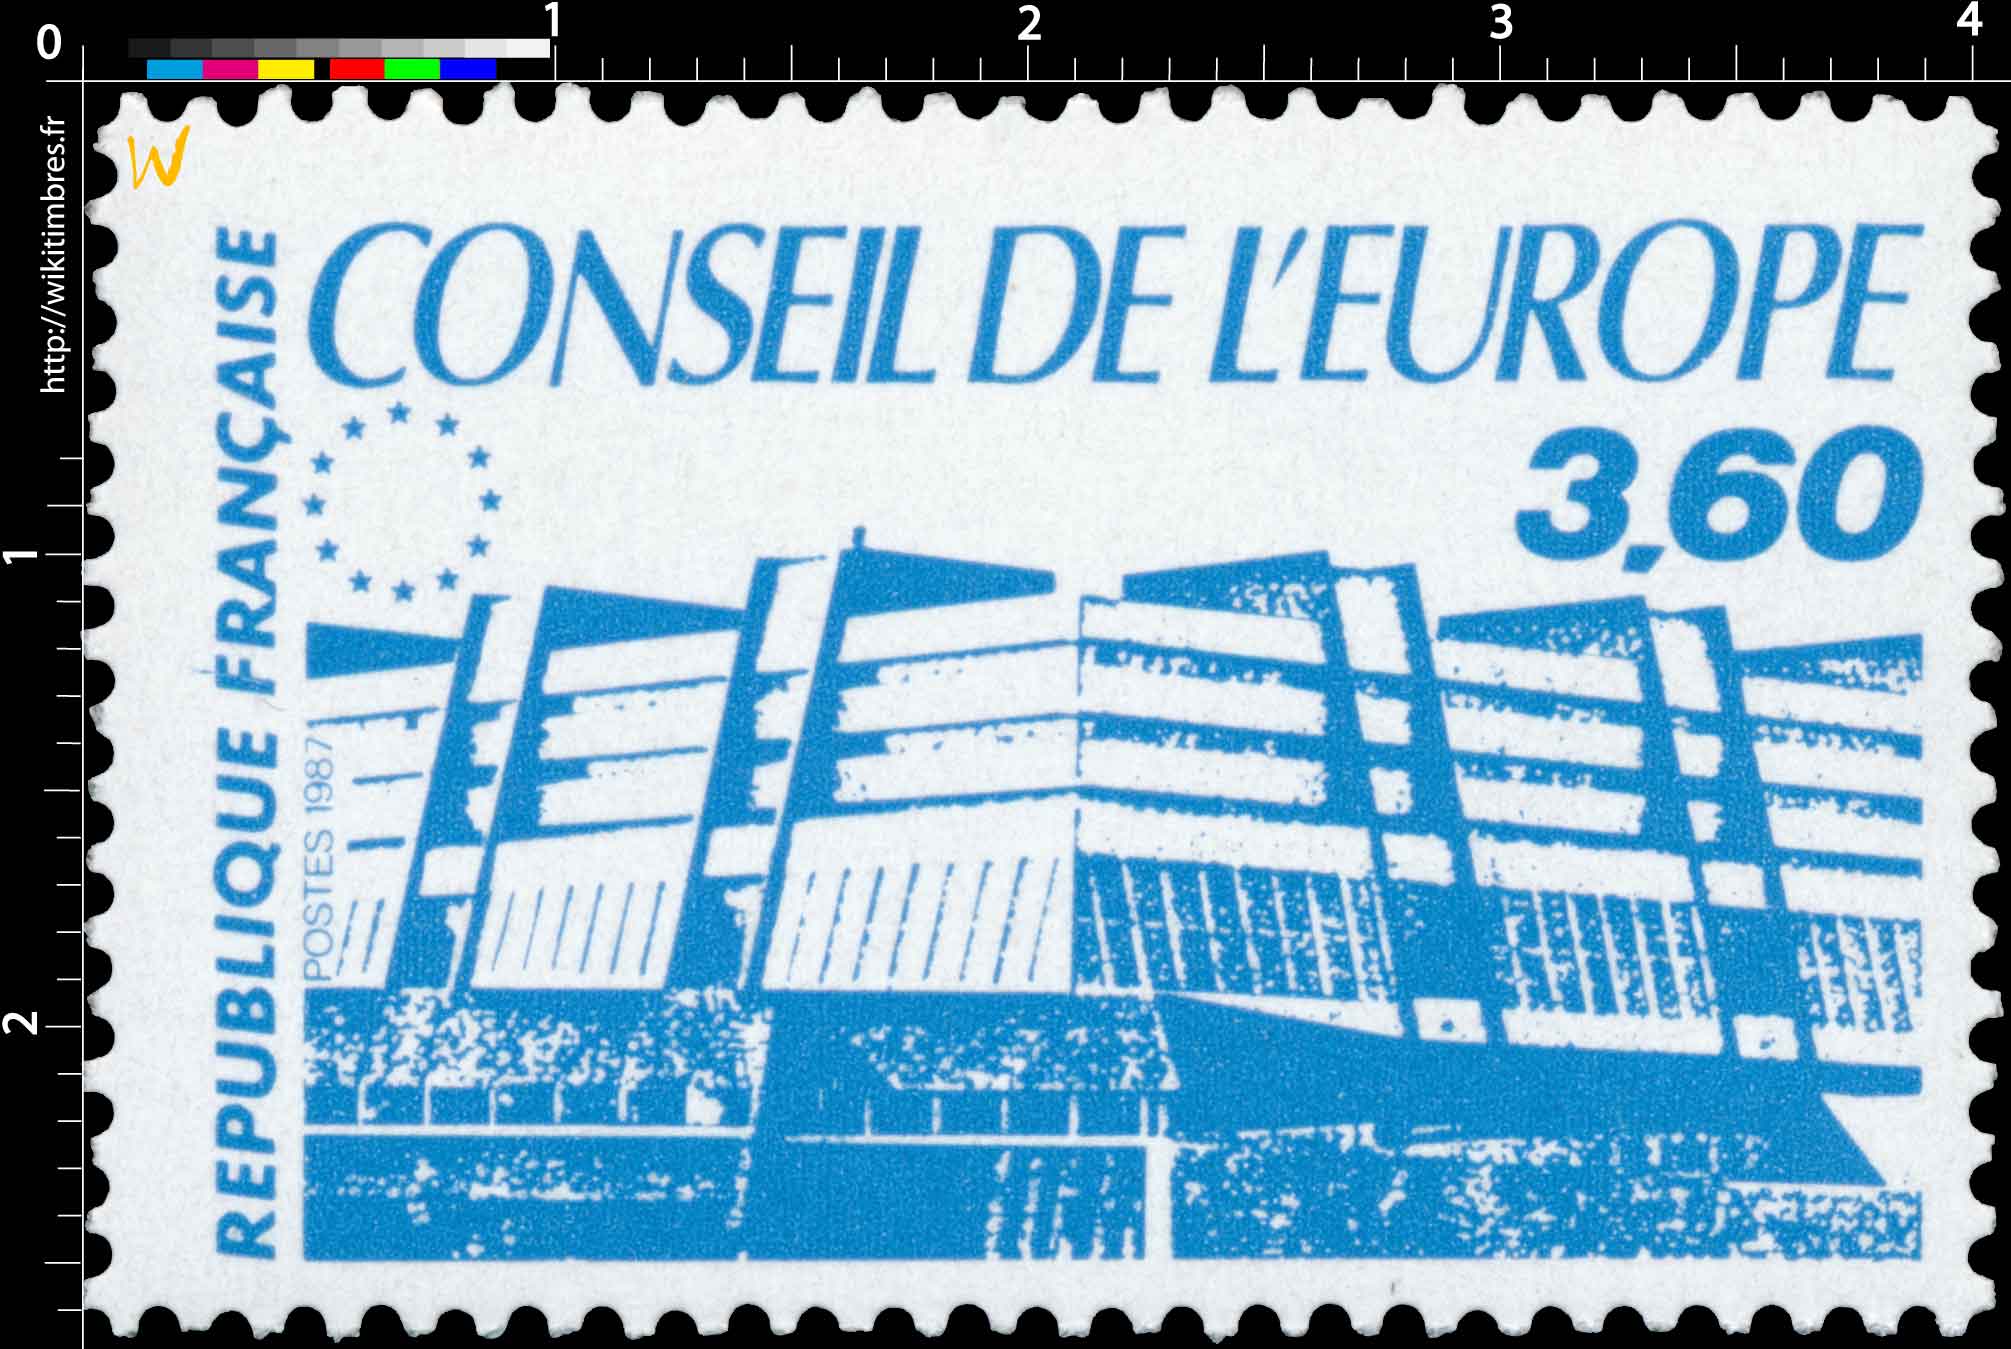 1987 CONSEIL DE L'EUROPE